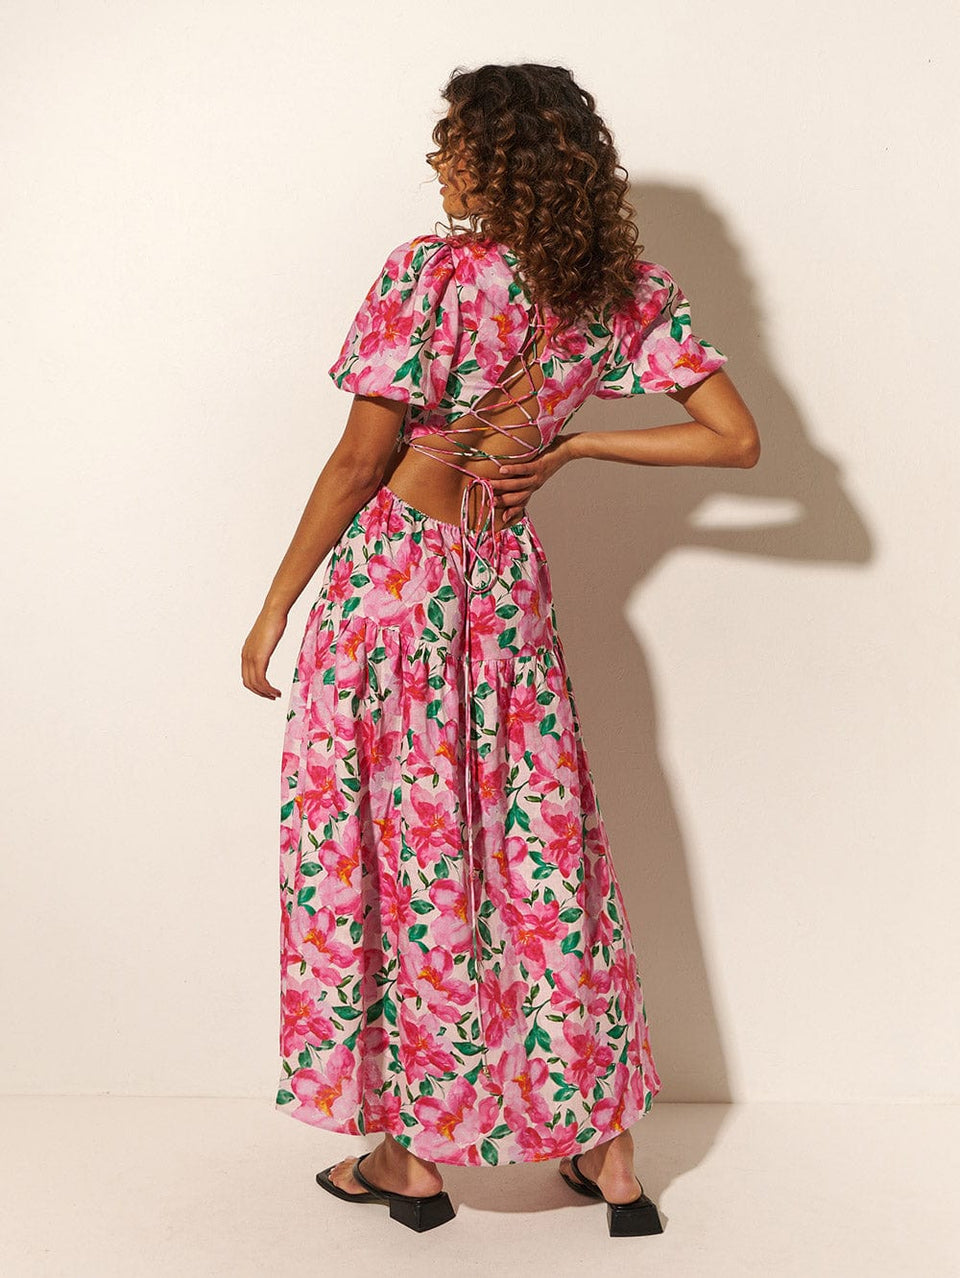 KIVARI Antonia Maxi Dress | Model wearing Pink and Green Floral Dress Back View